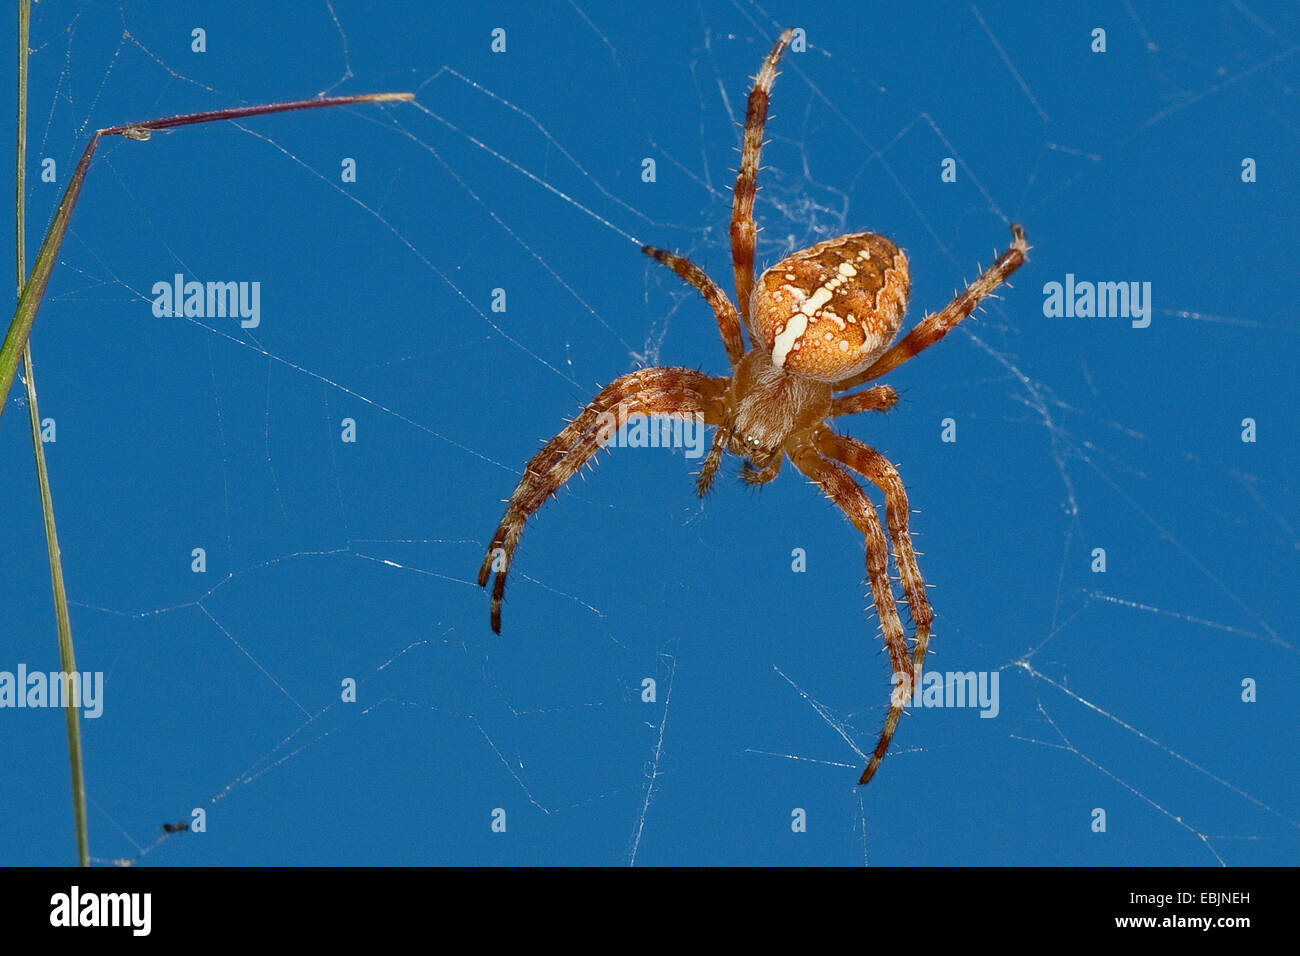 Croce orbweaver, giardino europeo spider, cross spider (Araneus diadematus), in agguato nel suo web, Germania Foto Stock